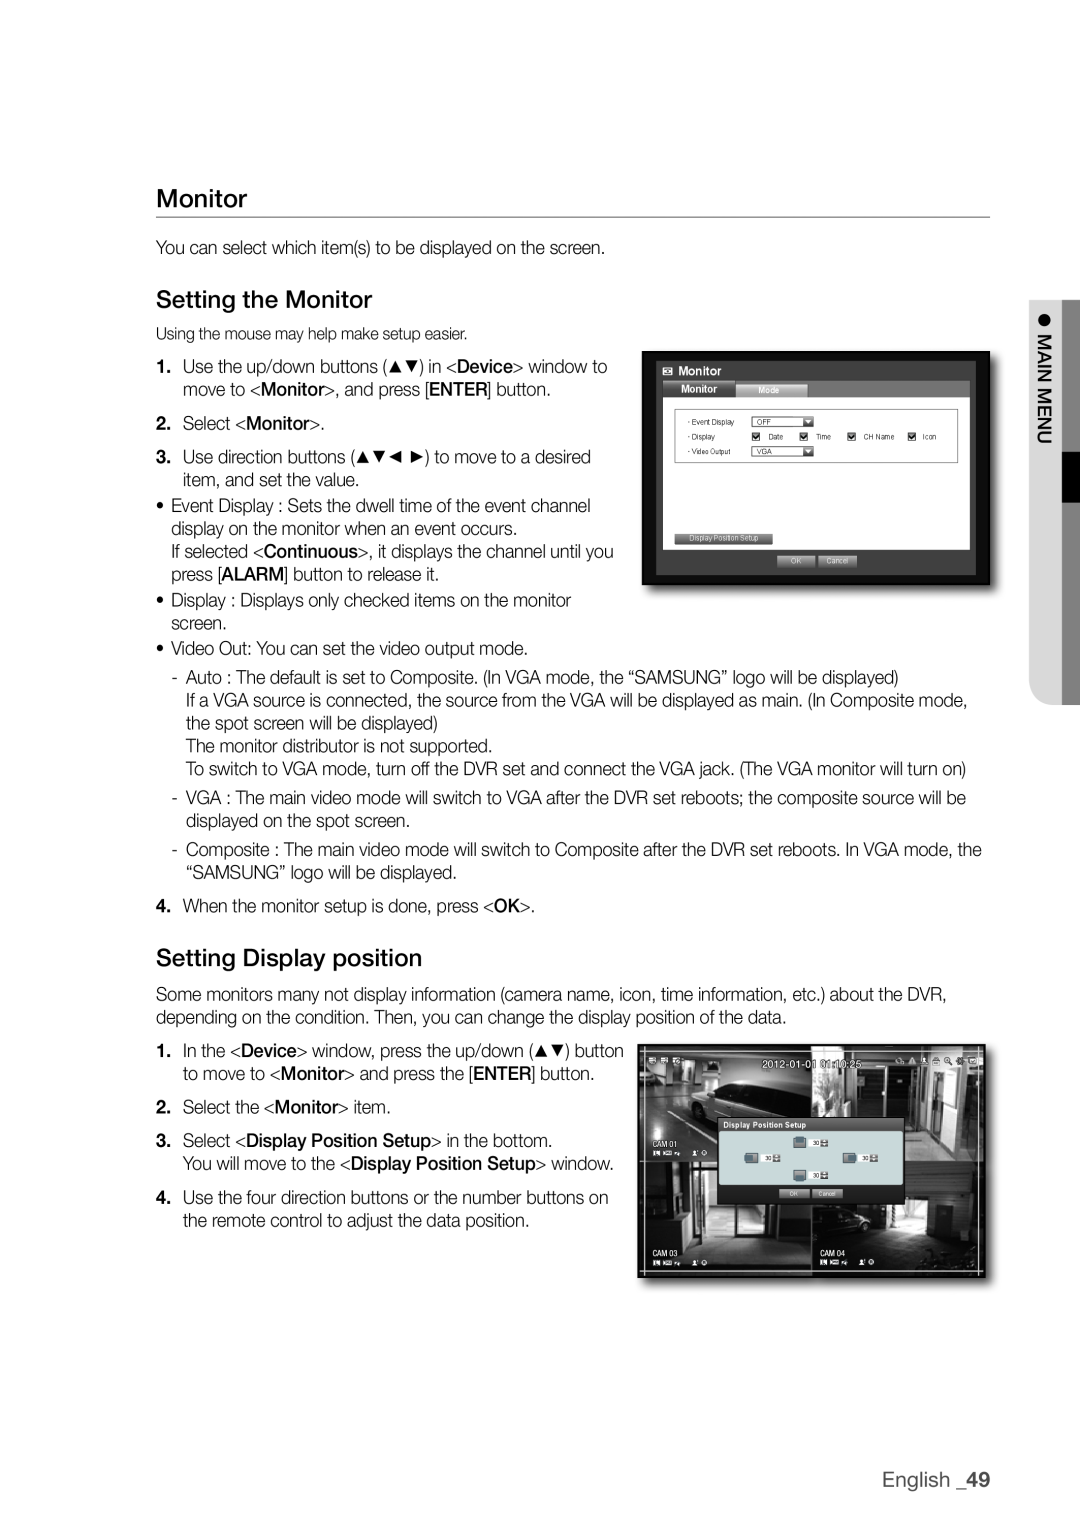 Samsung SDR3100 user manual Setting the monitor, Setting Display position, English _49 